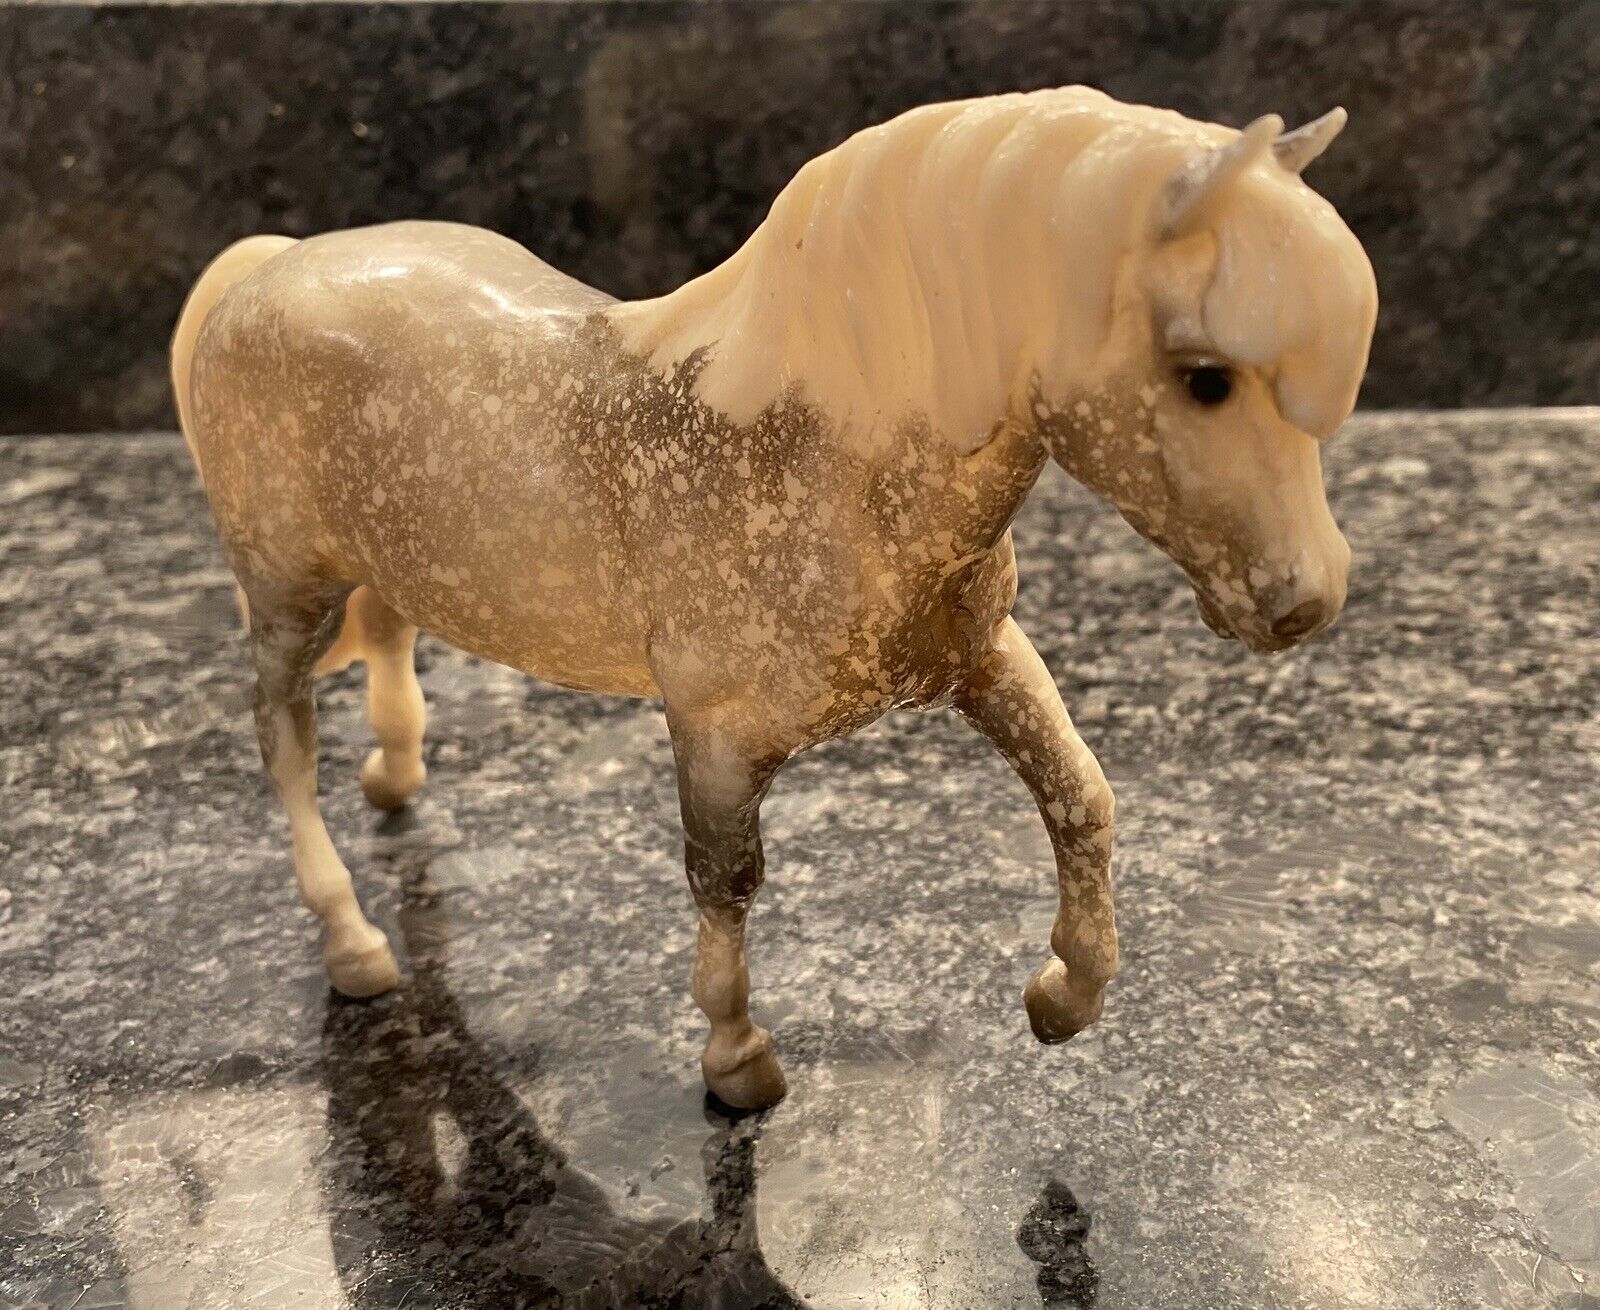 Vintage Breyer Horse - “Merrylegs” One Of Black Beauty Friends- Gray Welch Pony